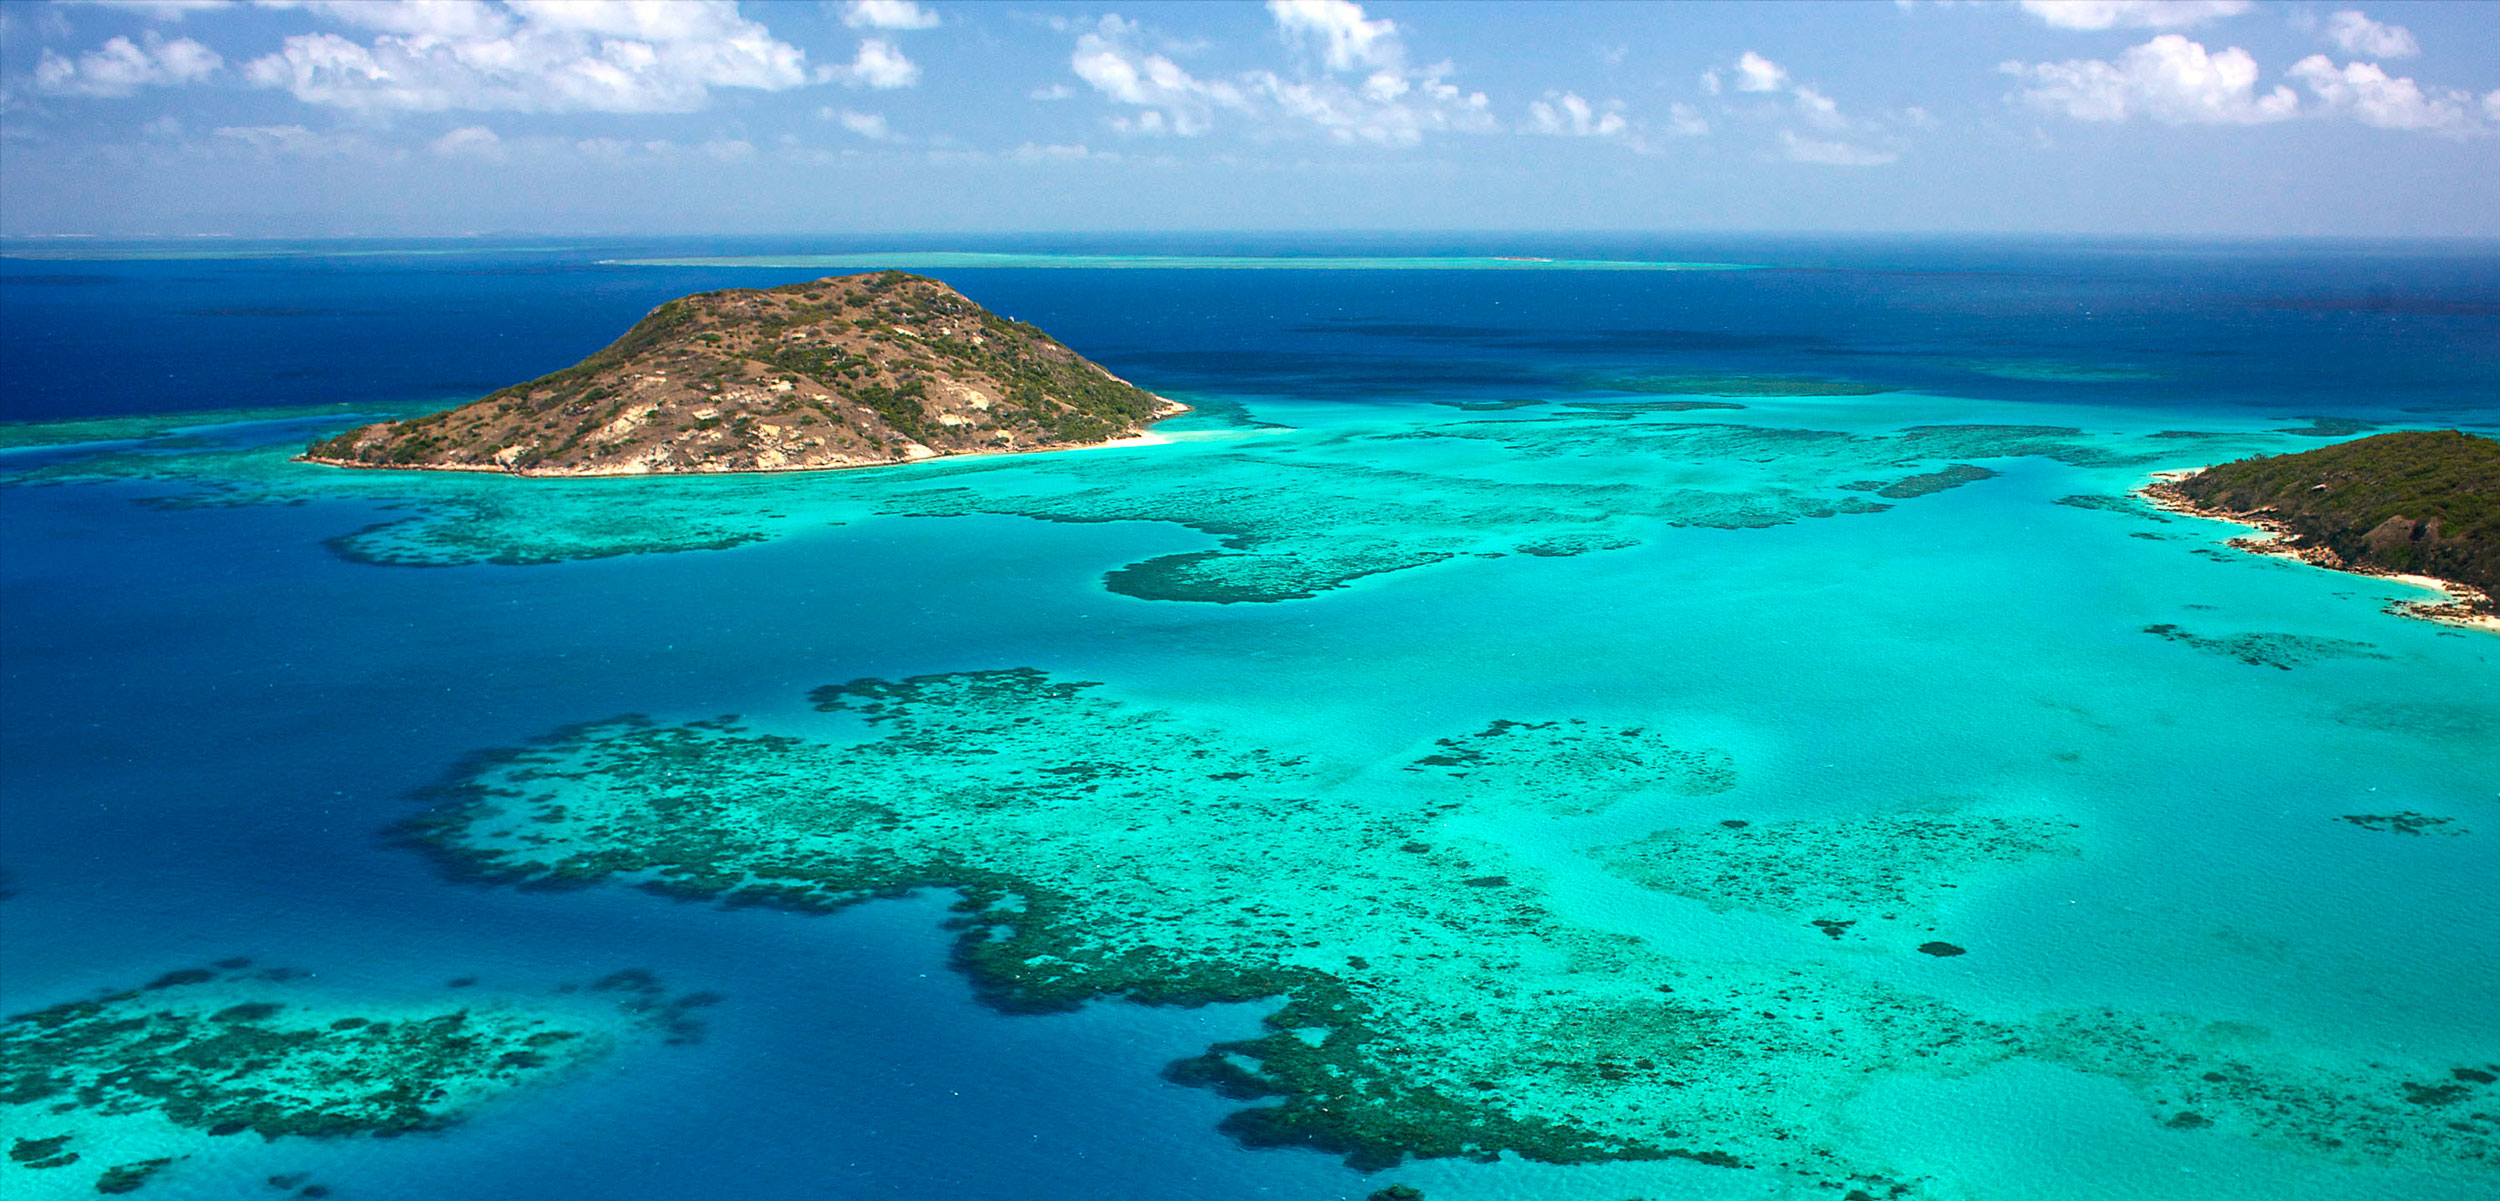 Coral reef, Lizard Island National Park, Great Barrier Reef, Australia